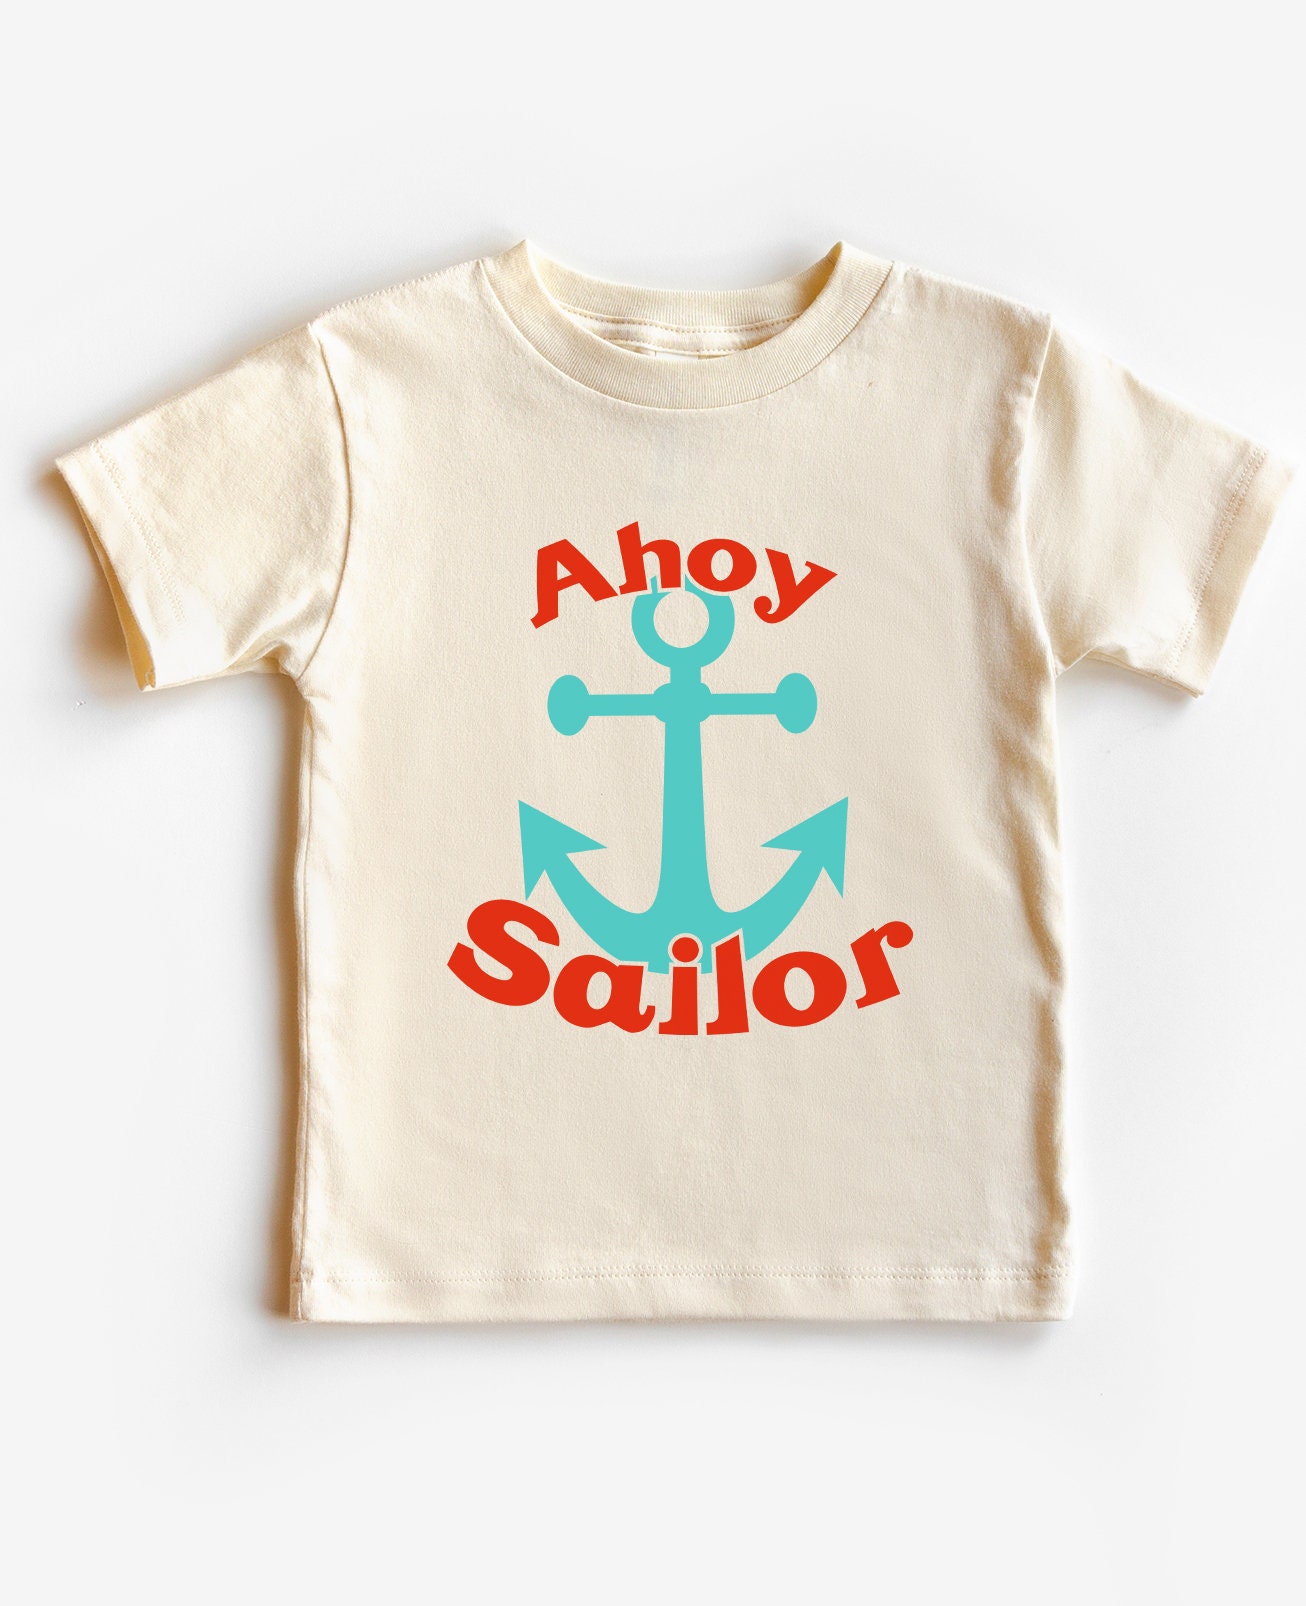 Ahoy Sailor Shirt,kids Ship Anchor Shirt, Fisherman Toddler Shirt